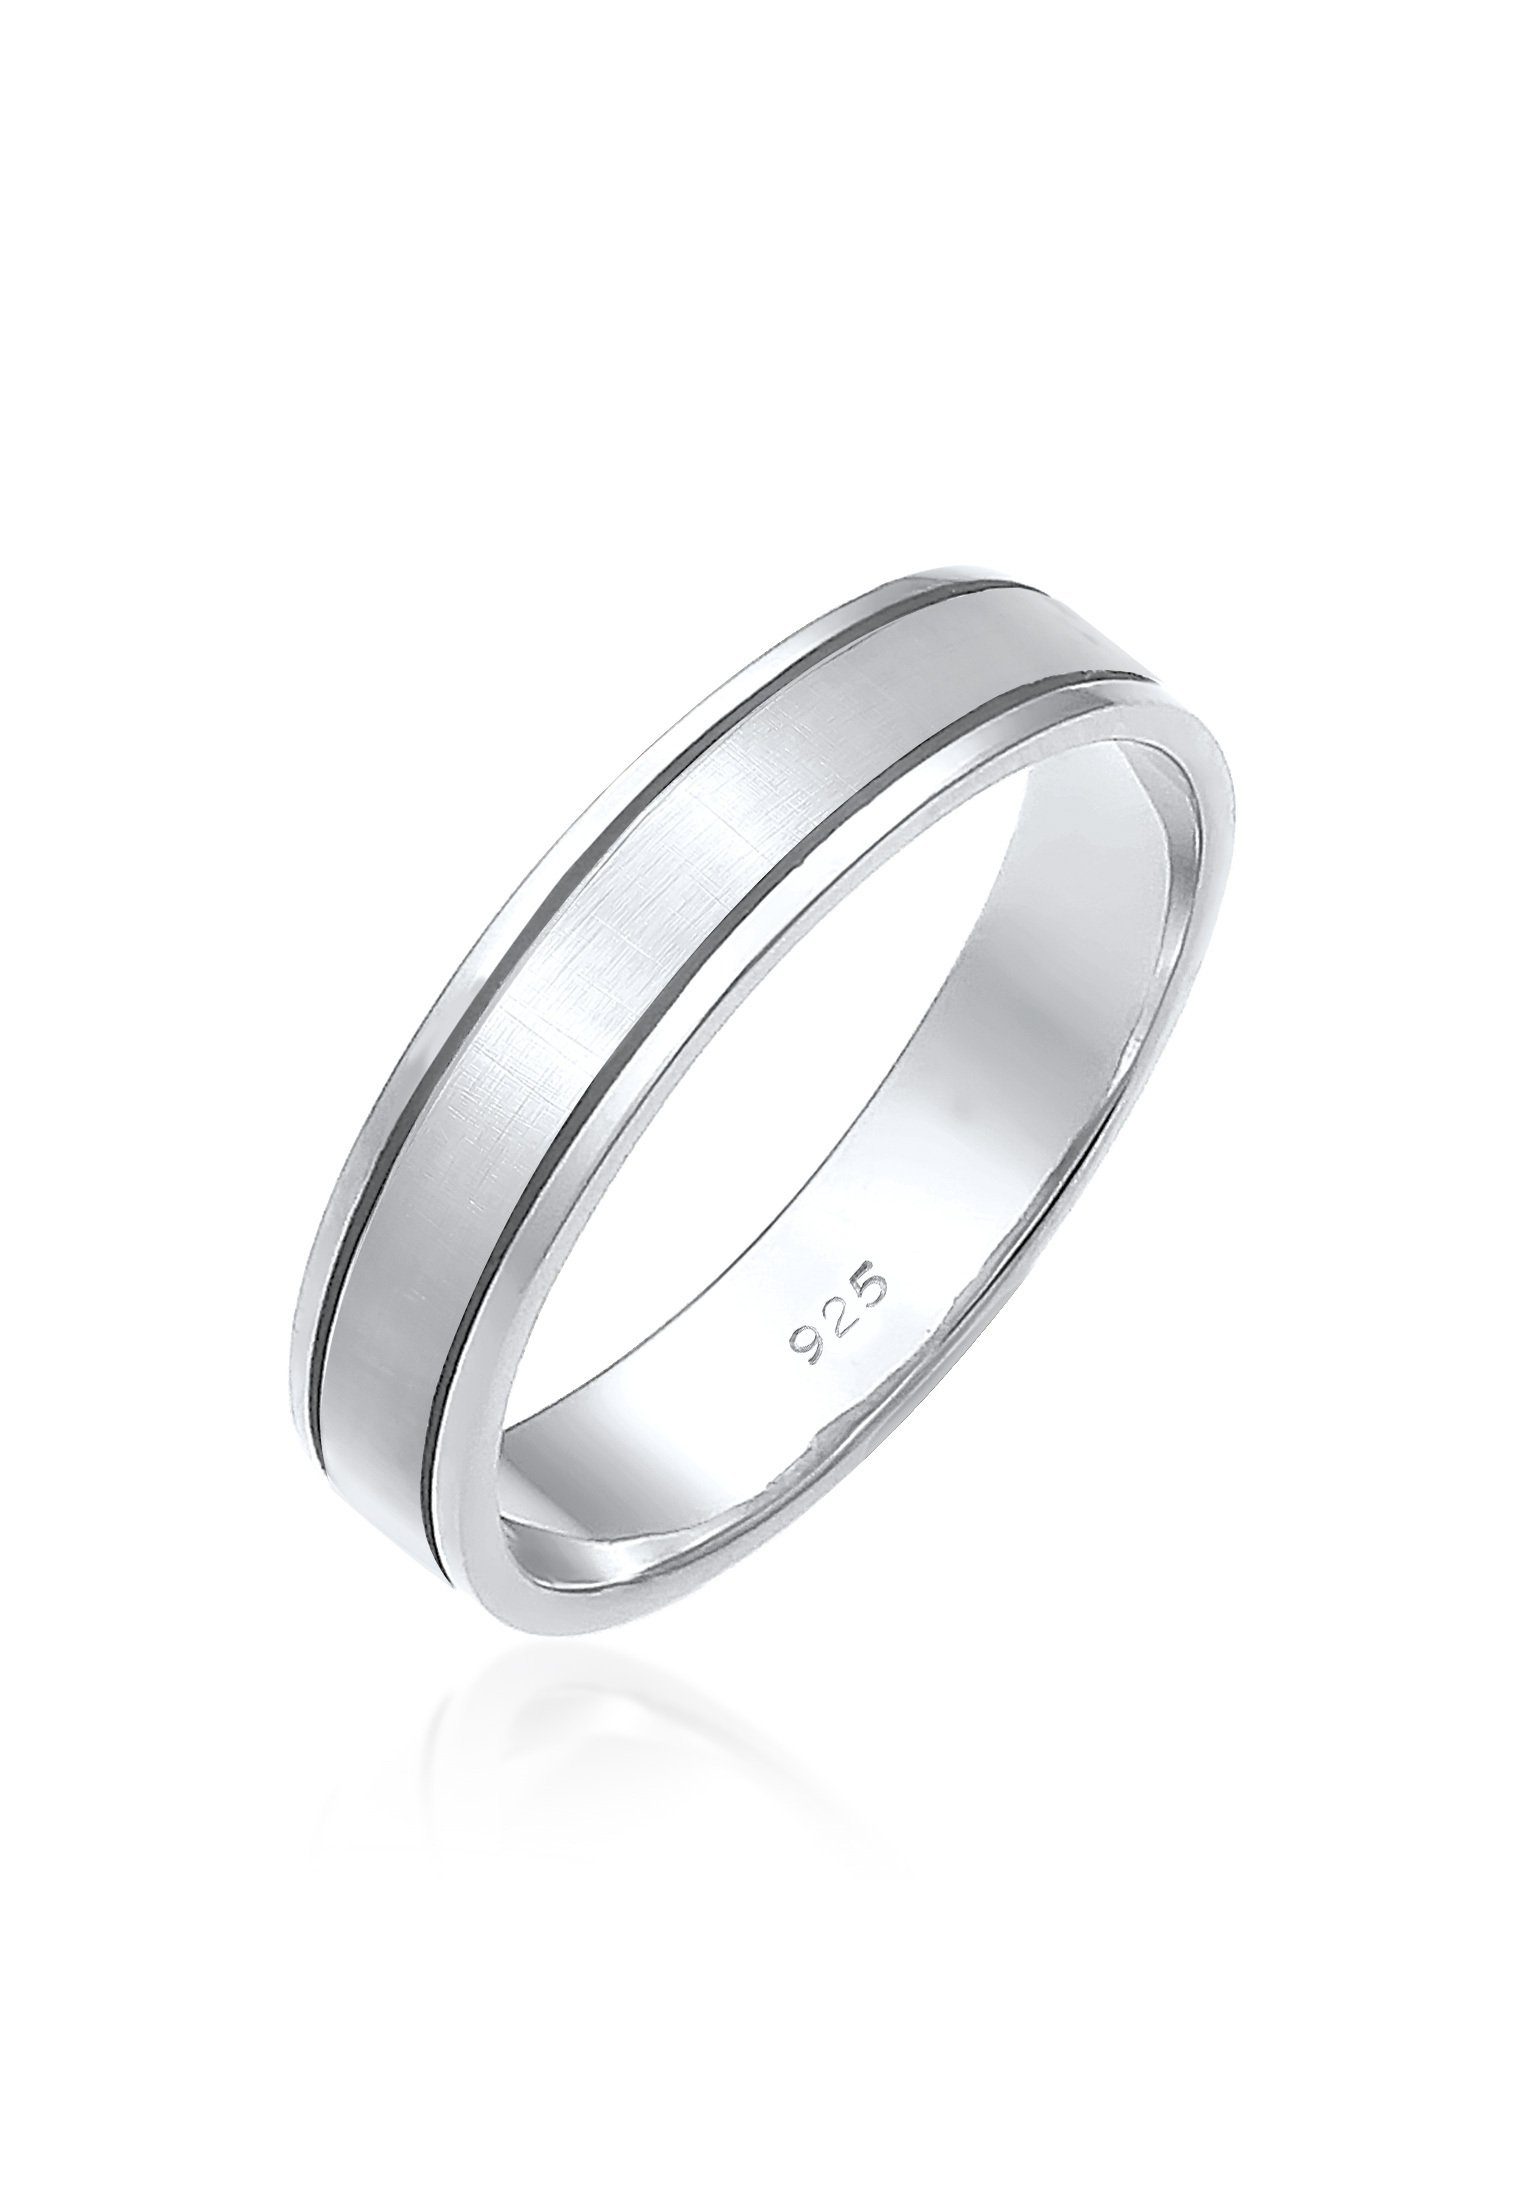 Trauring Elli Hochzeit Ehe Bandring Premium Silber 925 Partnerring Paarring